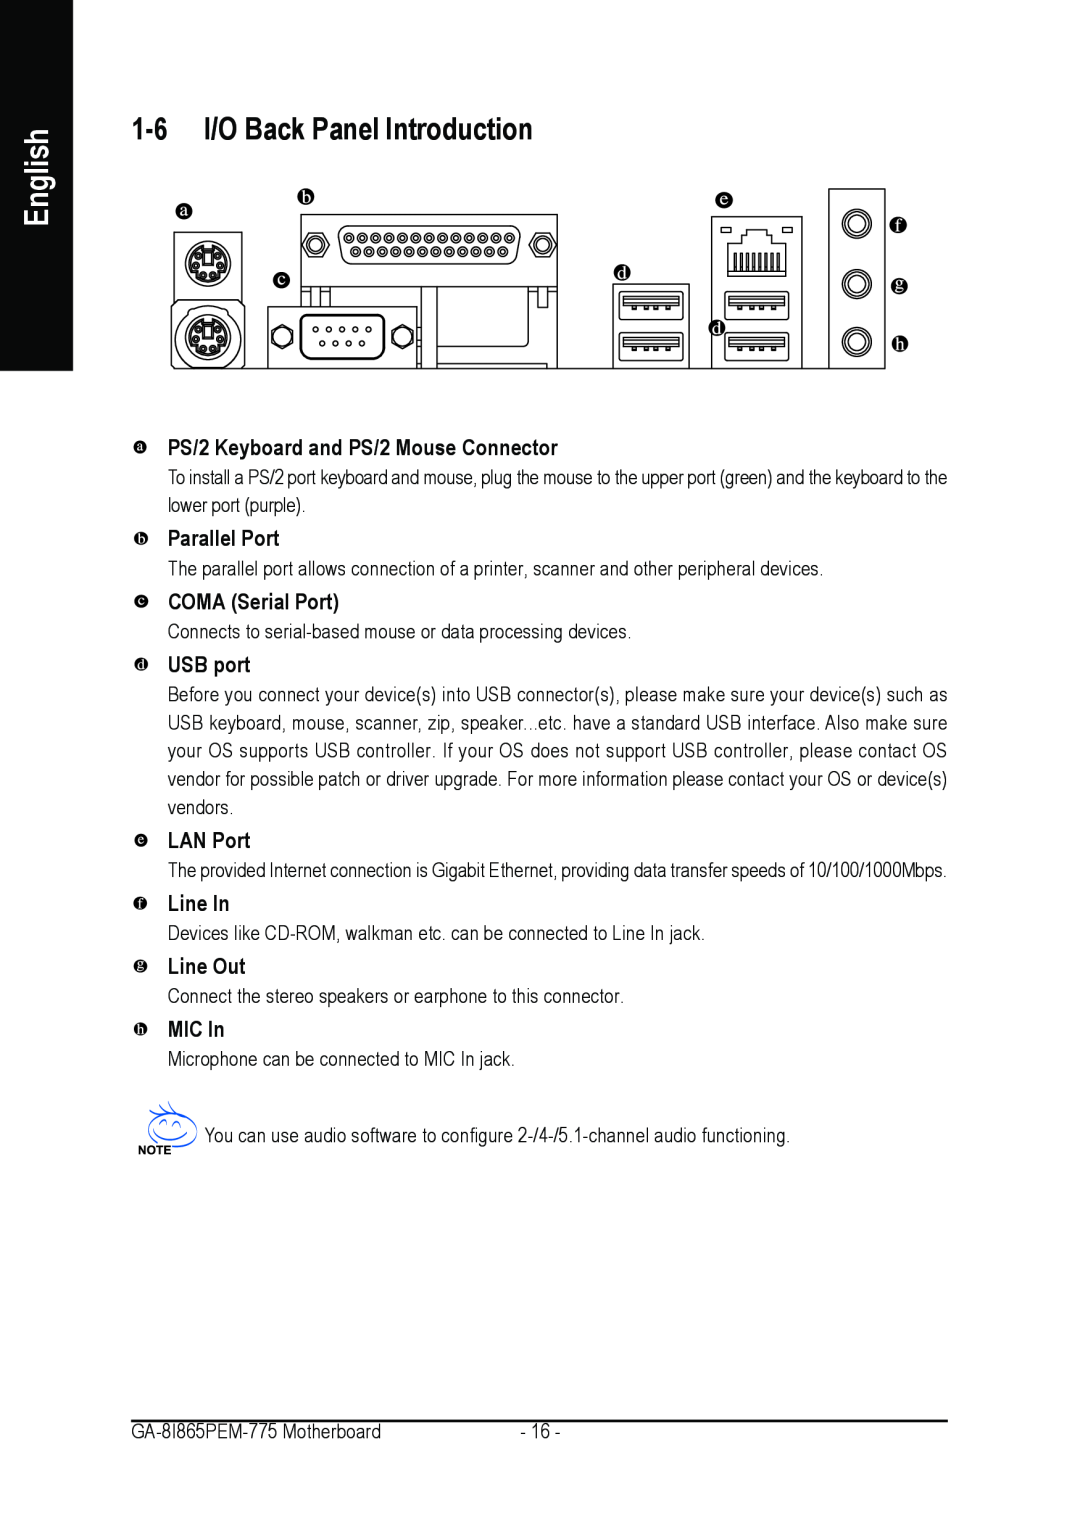 Gigabyte GA-8I865PEM-775 1-6 I/O Back Panel Introduction, PS/2 Keyboard and PS/2 Mouse Connector, Parallel Port, USB port 